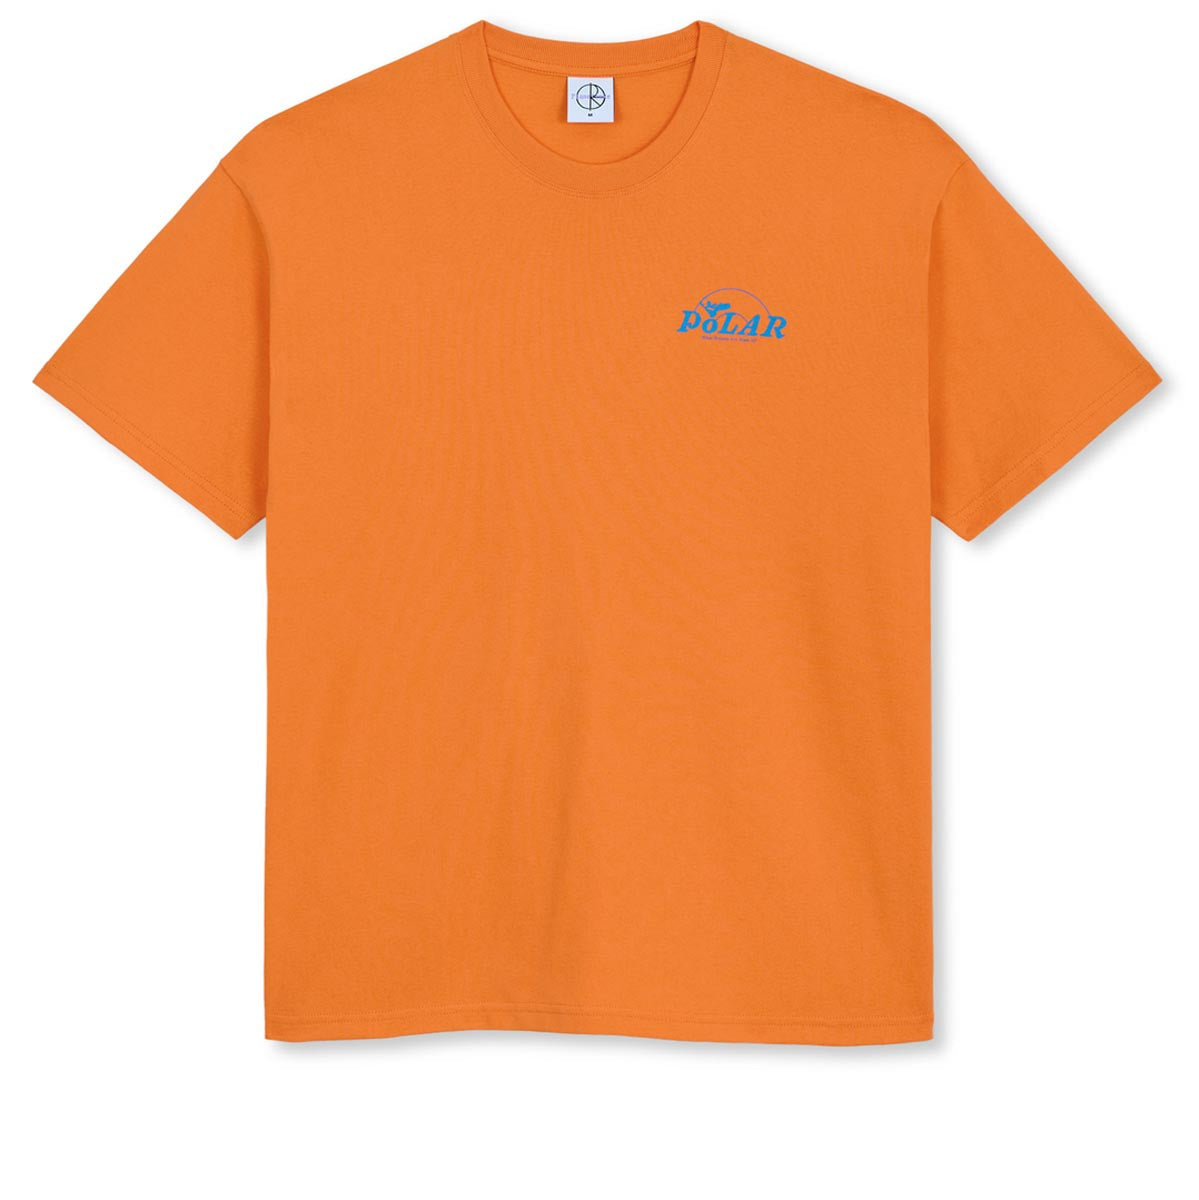 Polar Dreams T-Shirt - Orange image 1